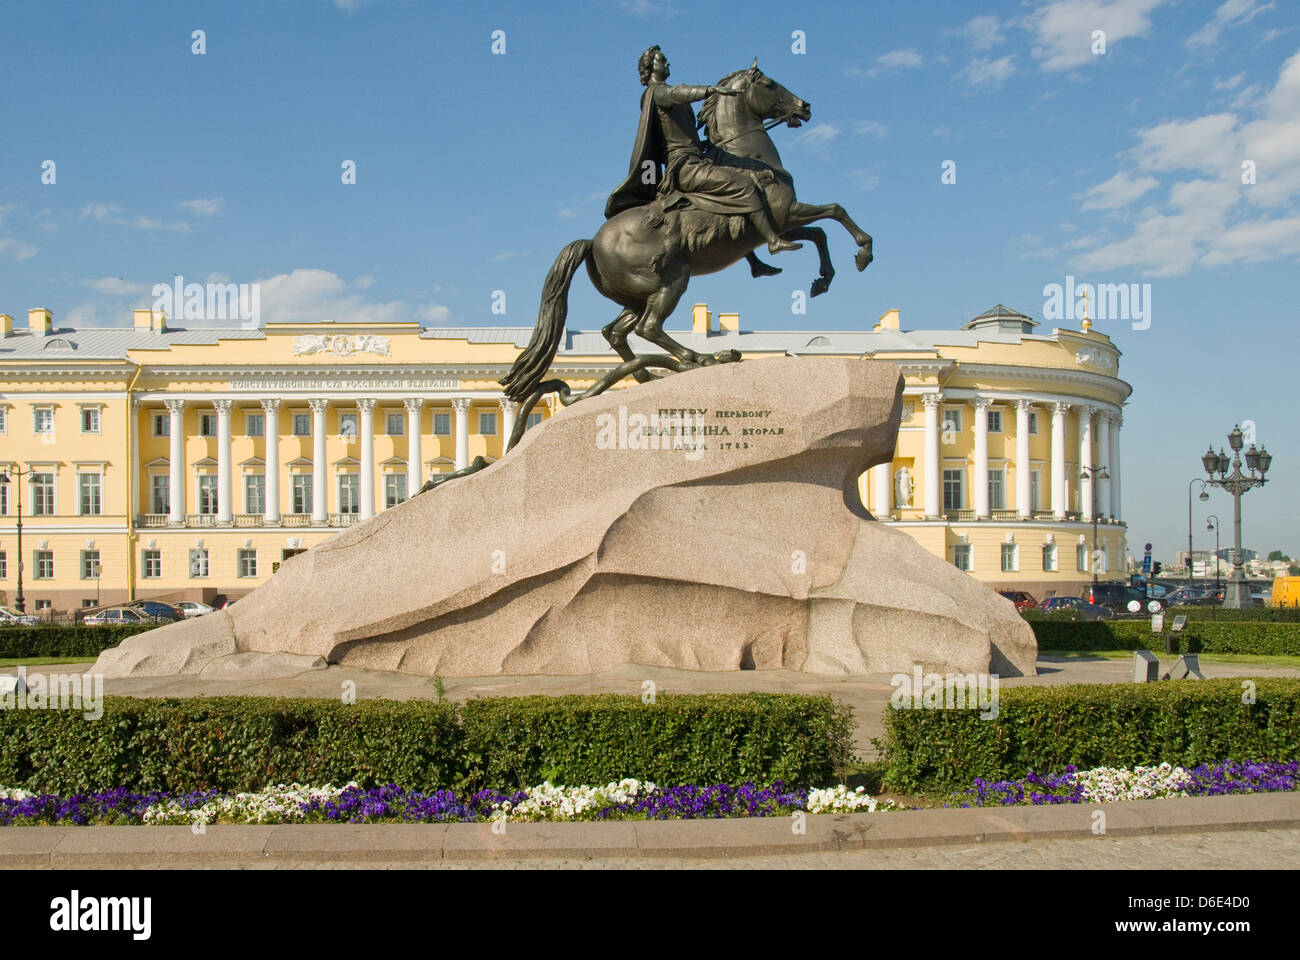 The Bronze Horseman Statue, St Petersburg, Russia Stock Photo - Alamy